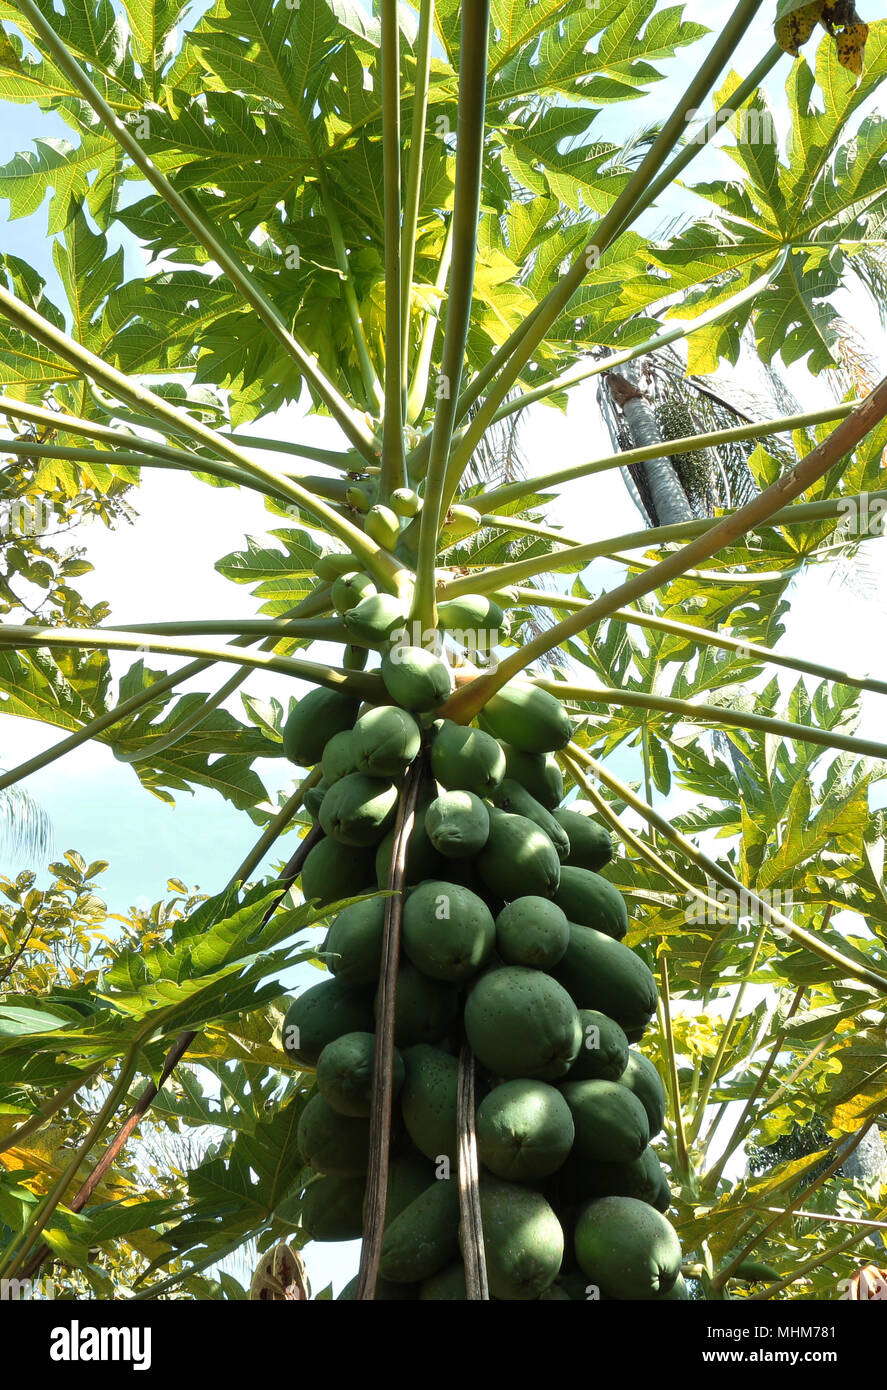 Green papayas on tree Stock Photo